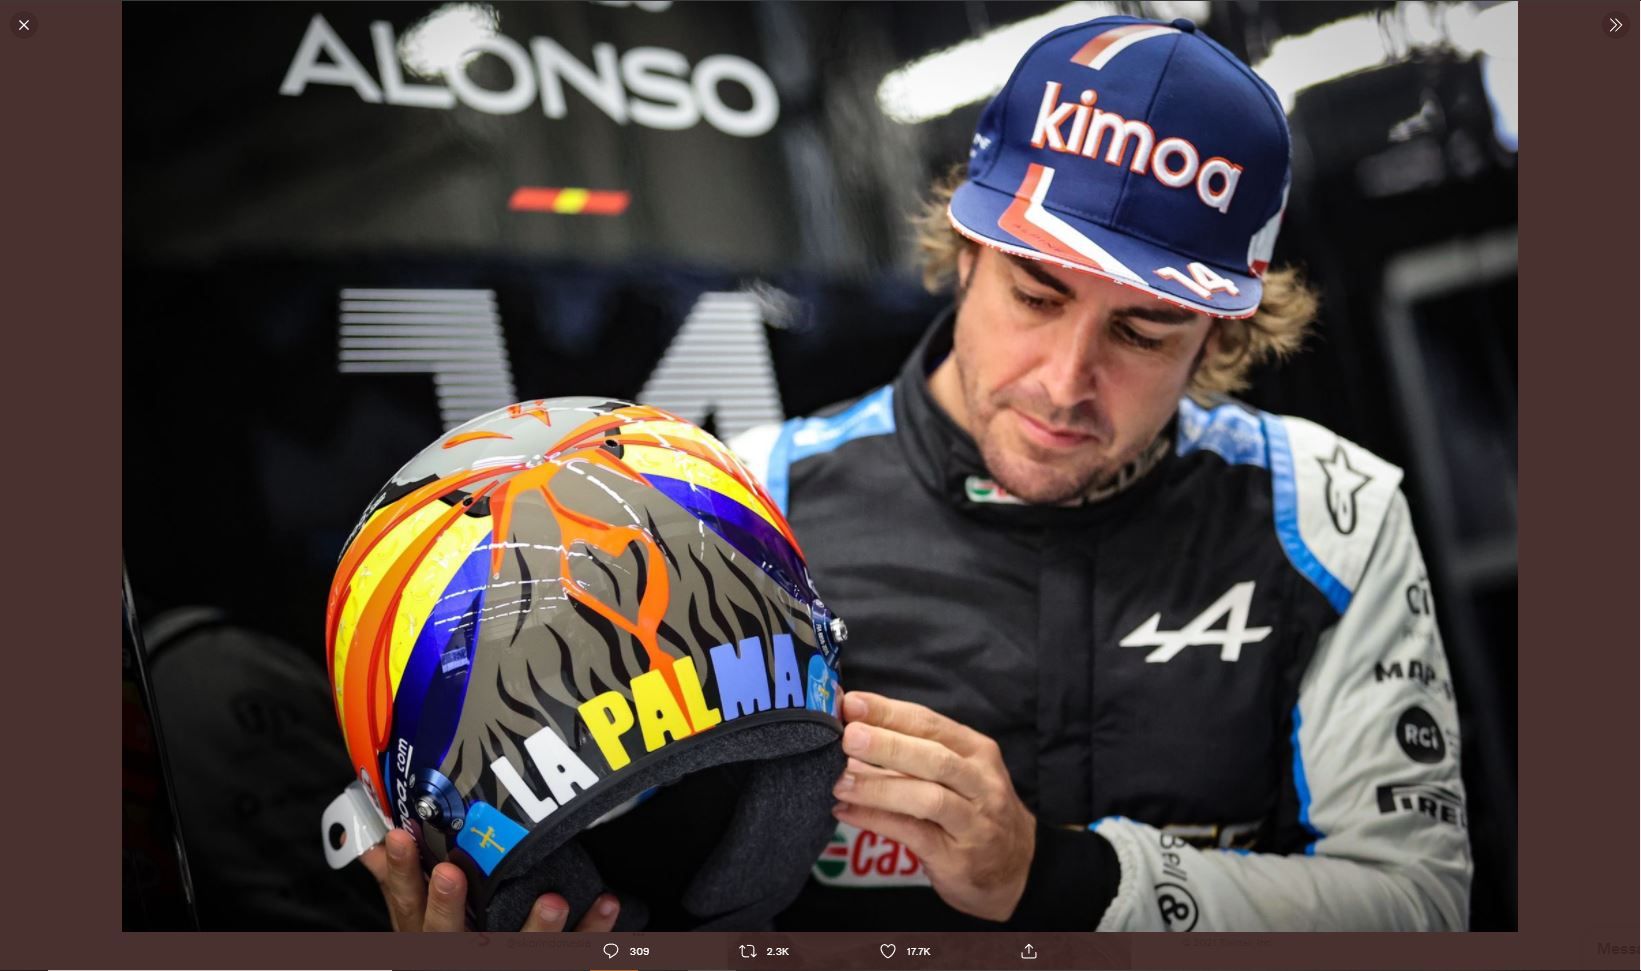 Berstatus Pembalap Senior, Fernando Alonso Tak Ikut Pengembangan Mobil F1 2022